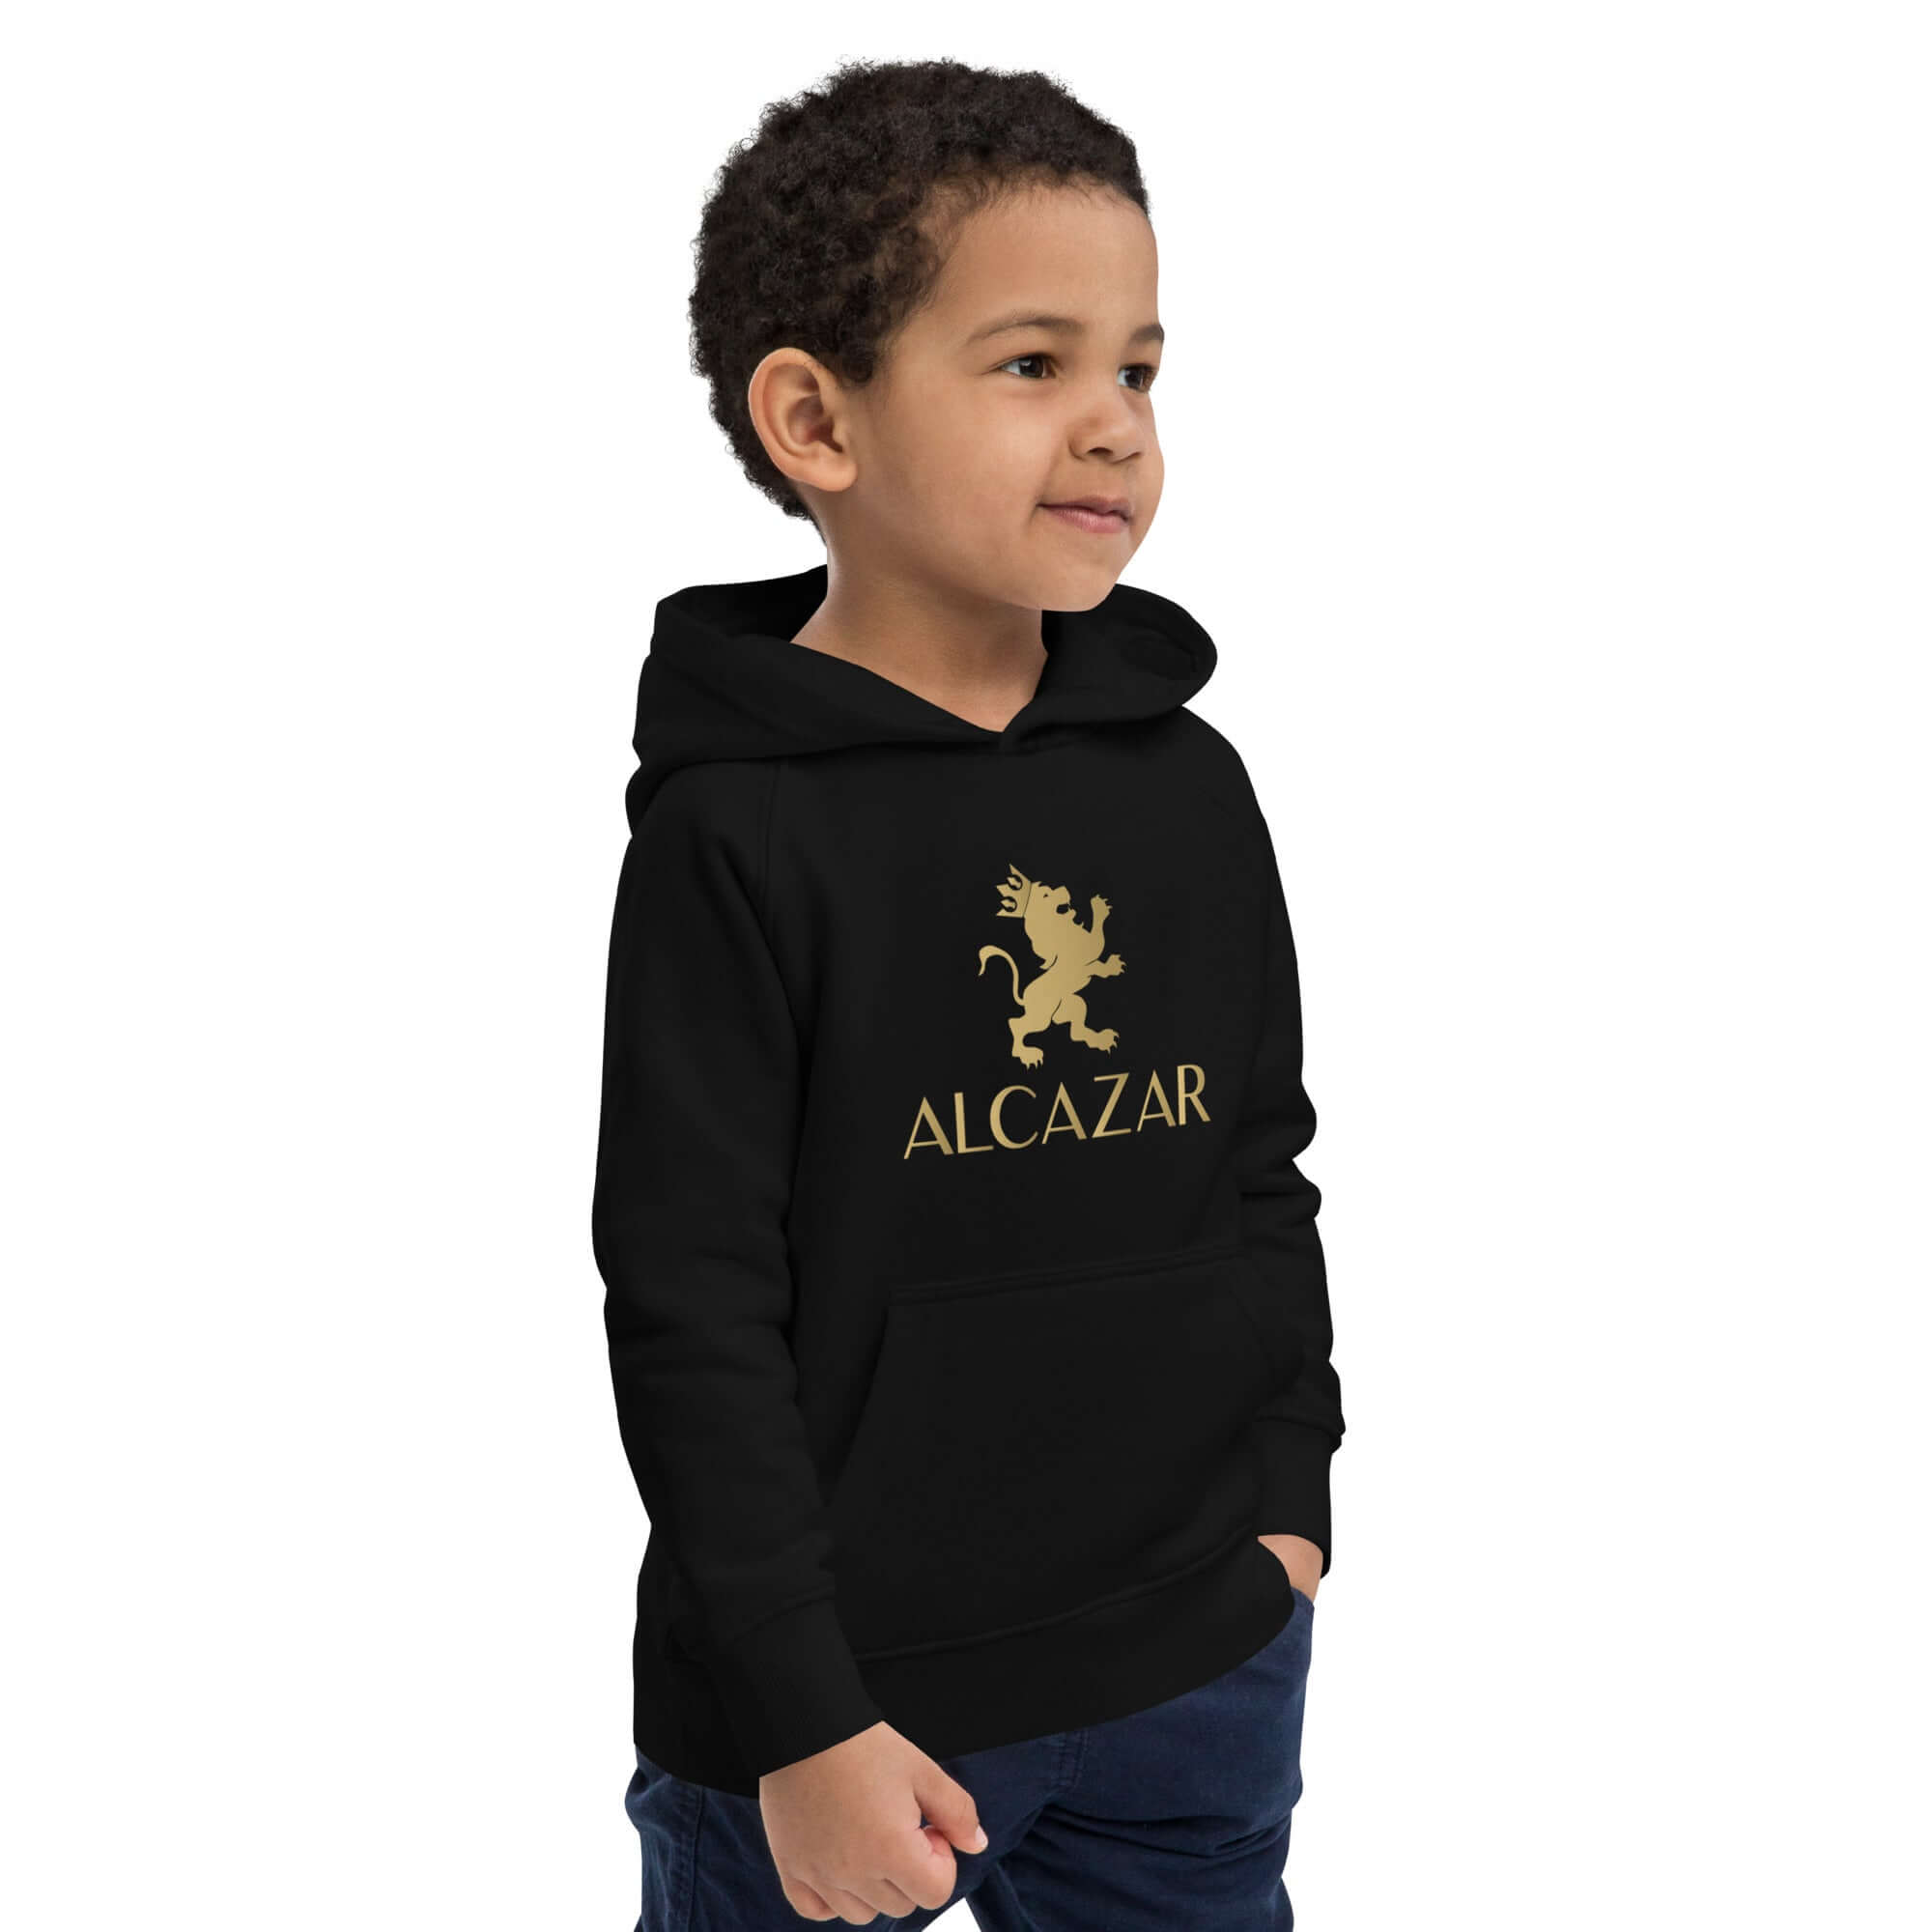 Alcazar Kids eco hoodie